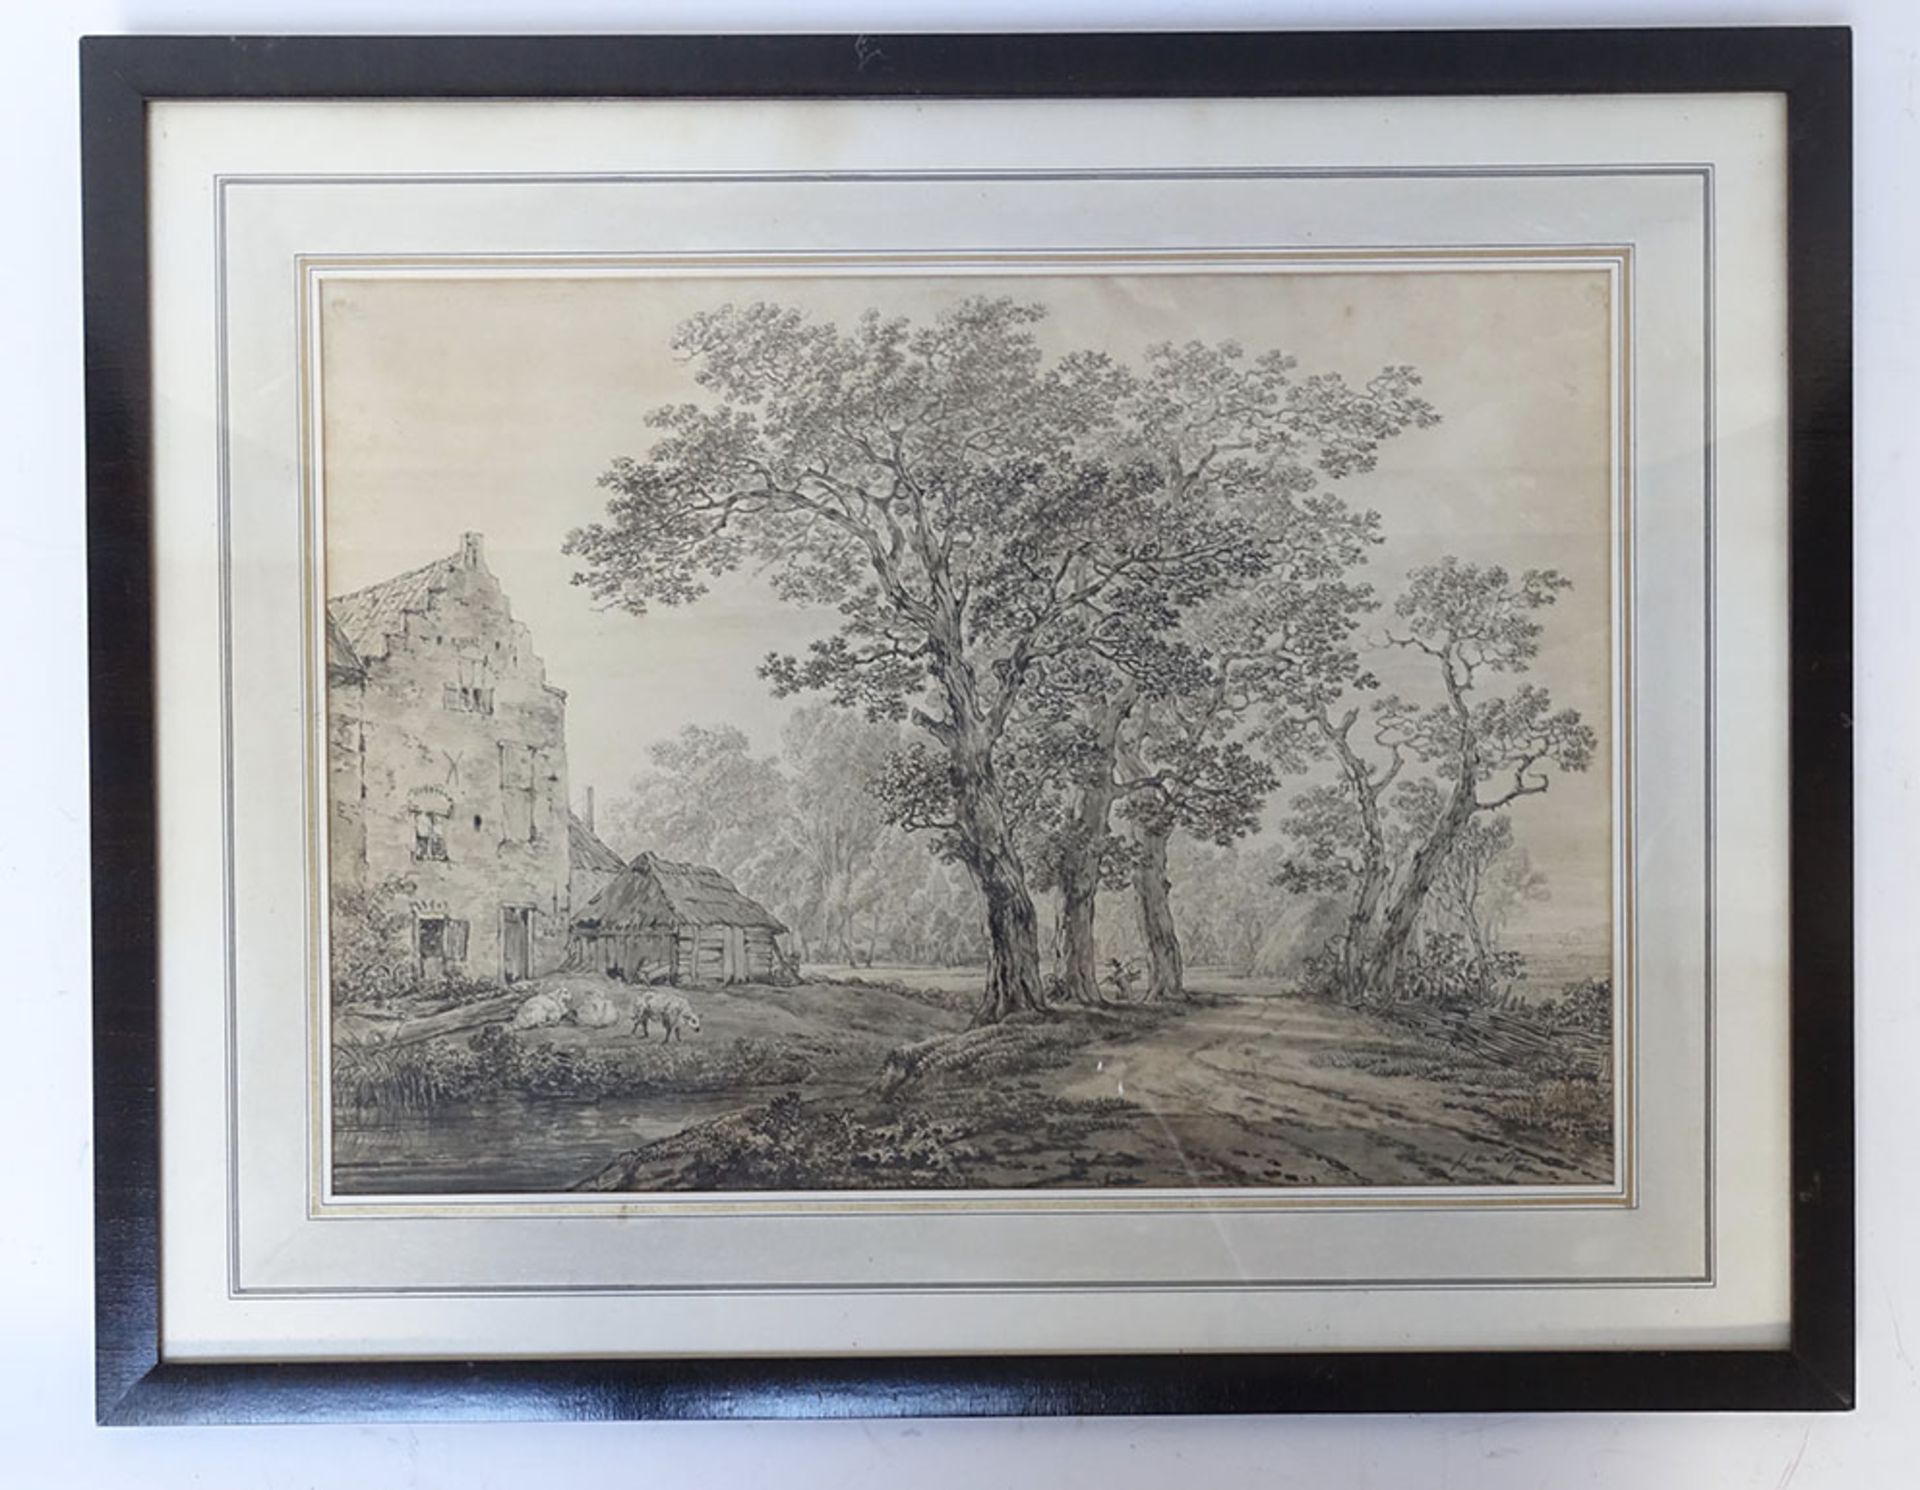 STRIJ, Jacob van (1756-1815). (Farmhouse and sheep in a tree-rich landscape). N.d. Watercolour.